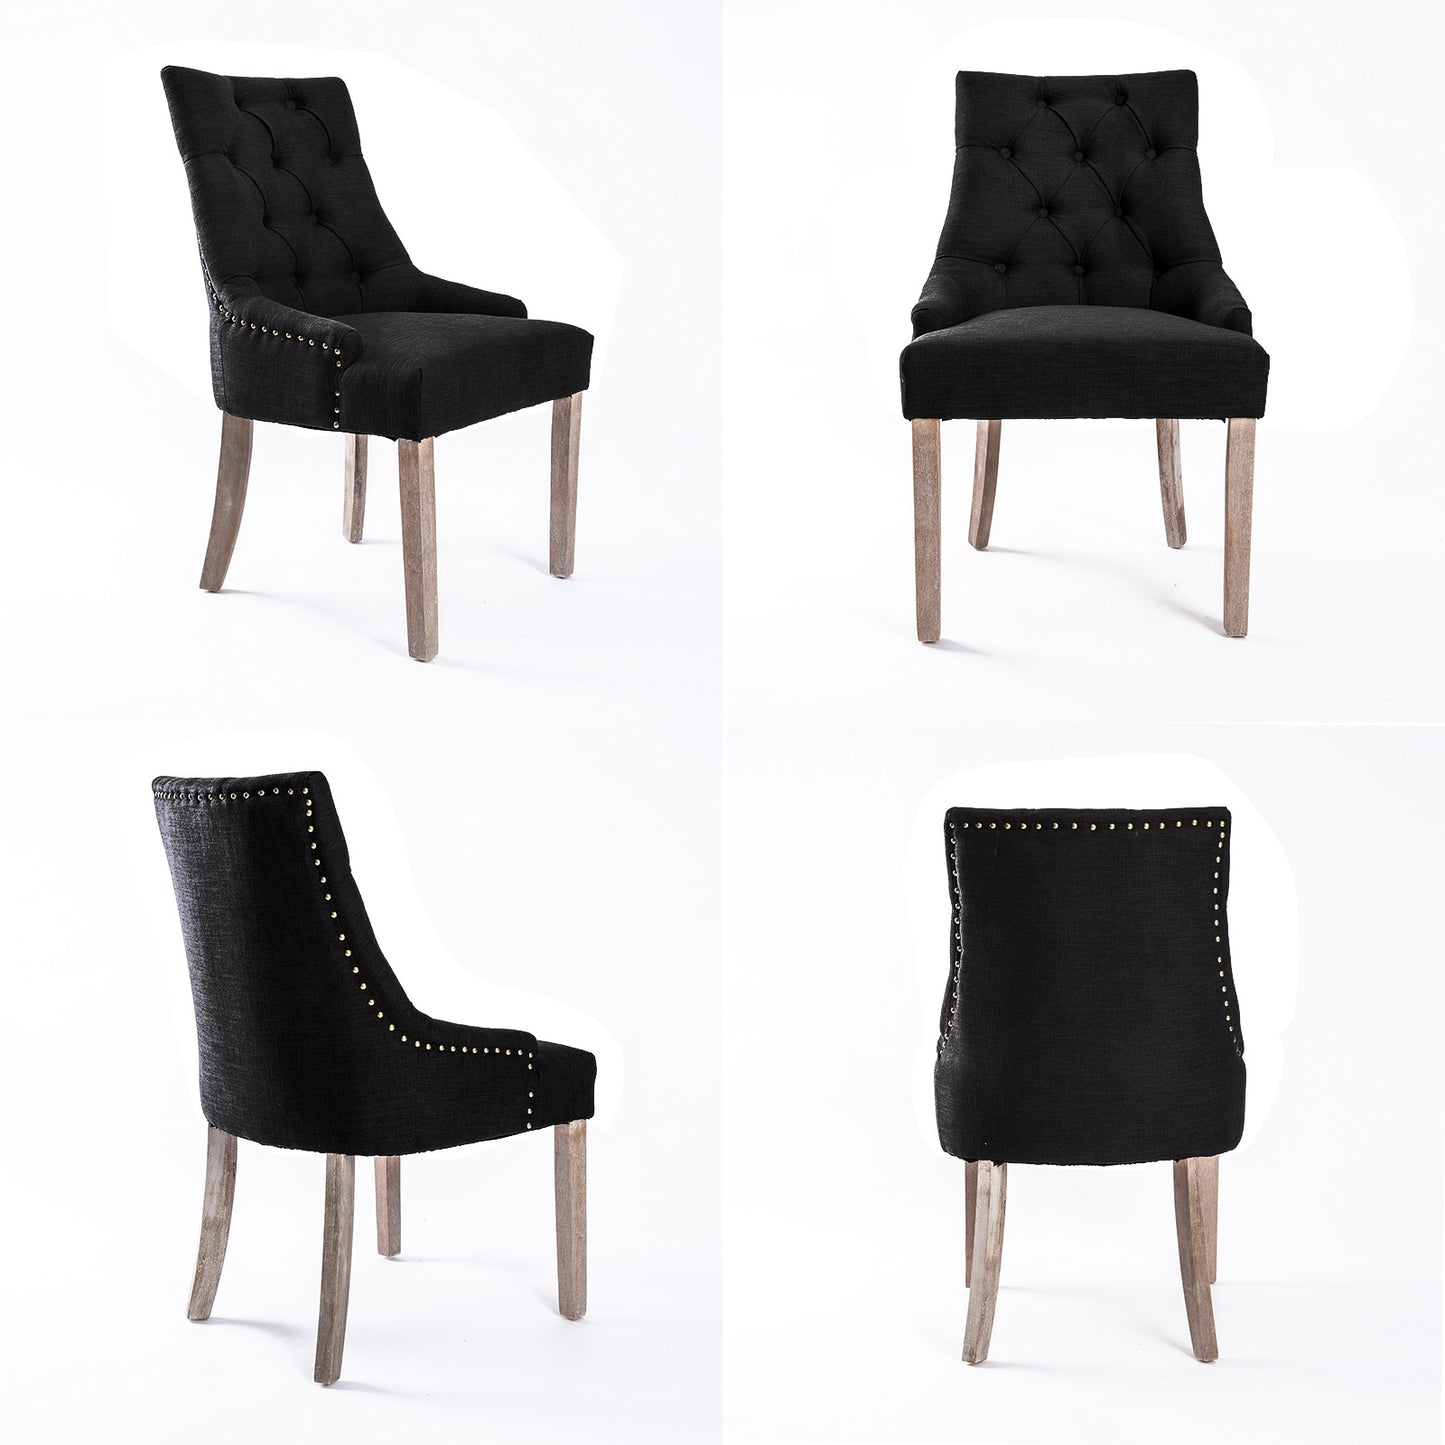 La Bella 4 Set French Provincial Dining Chair - Dark Black